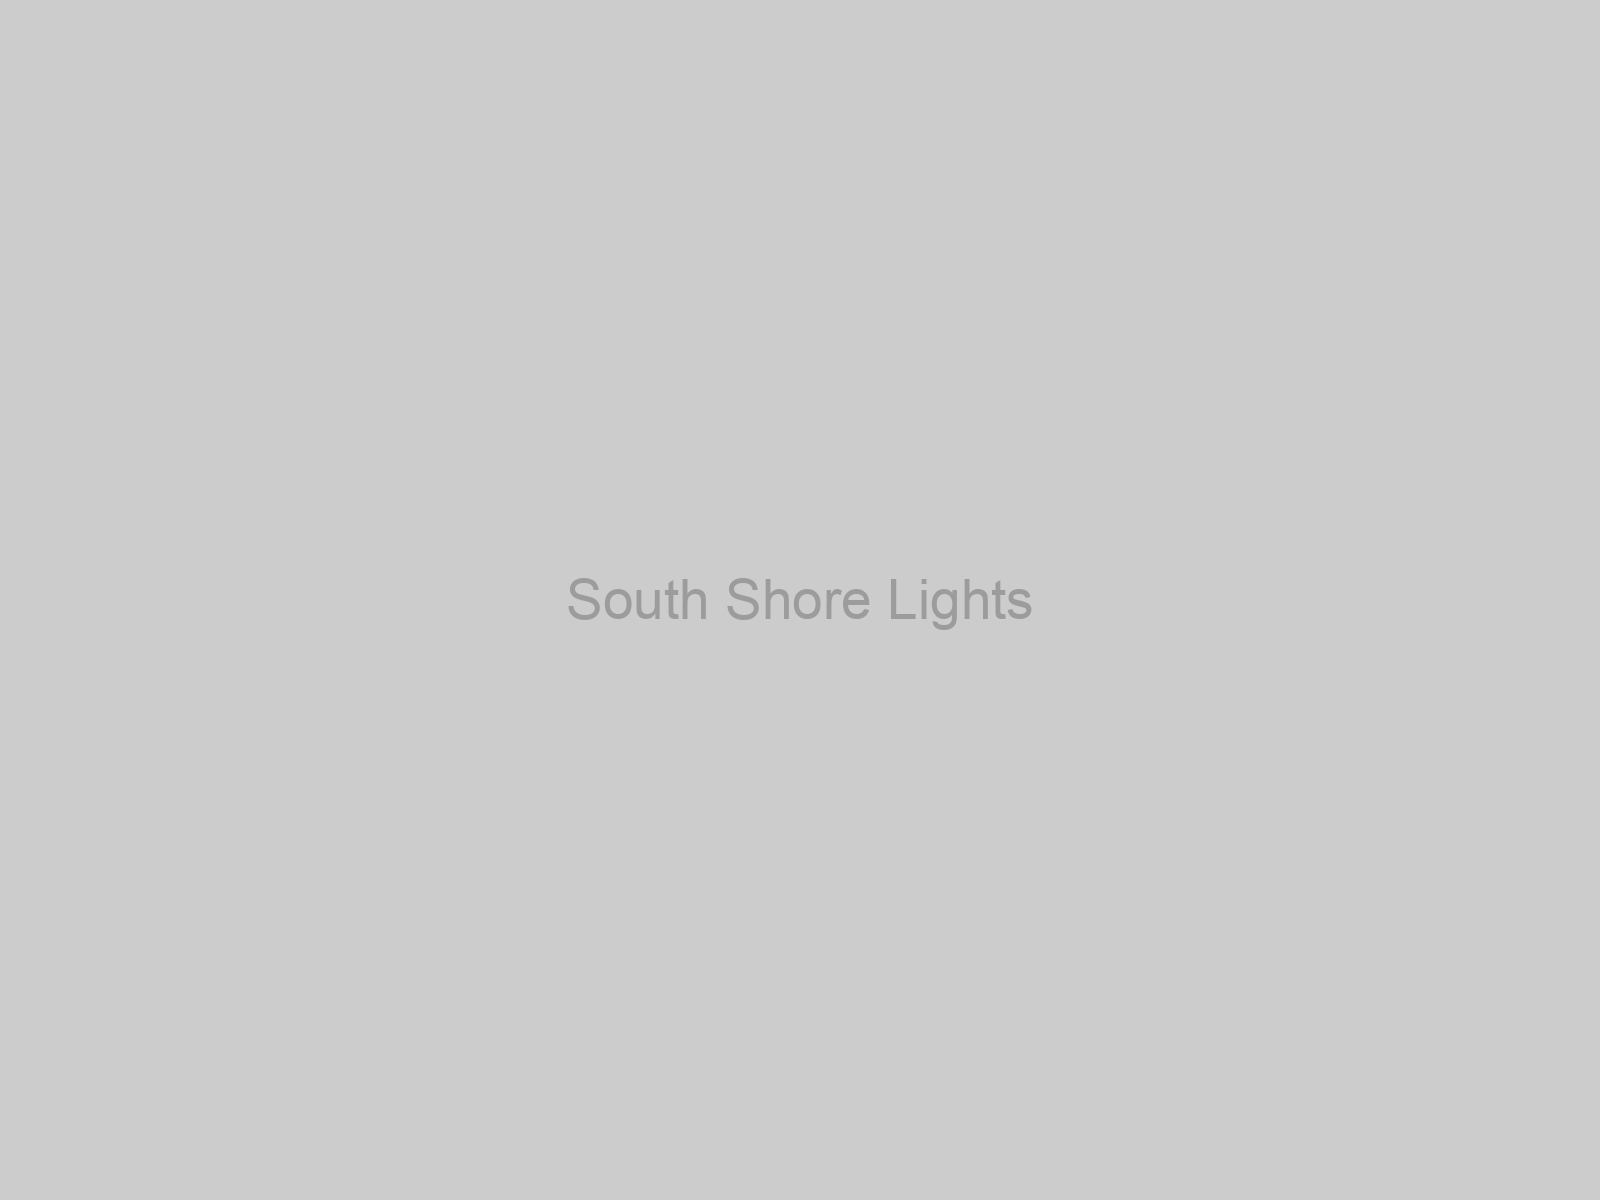 South Shore Lights